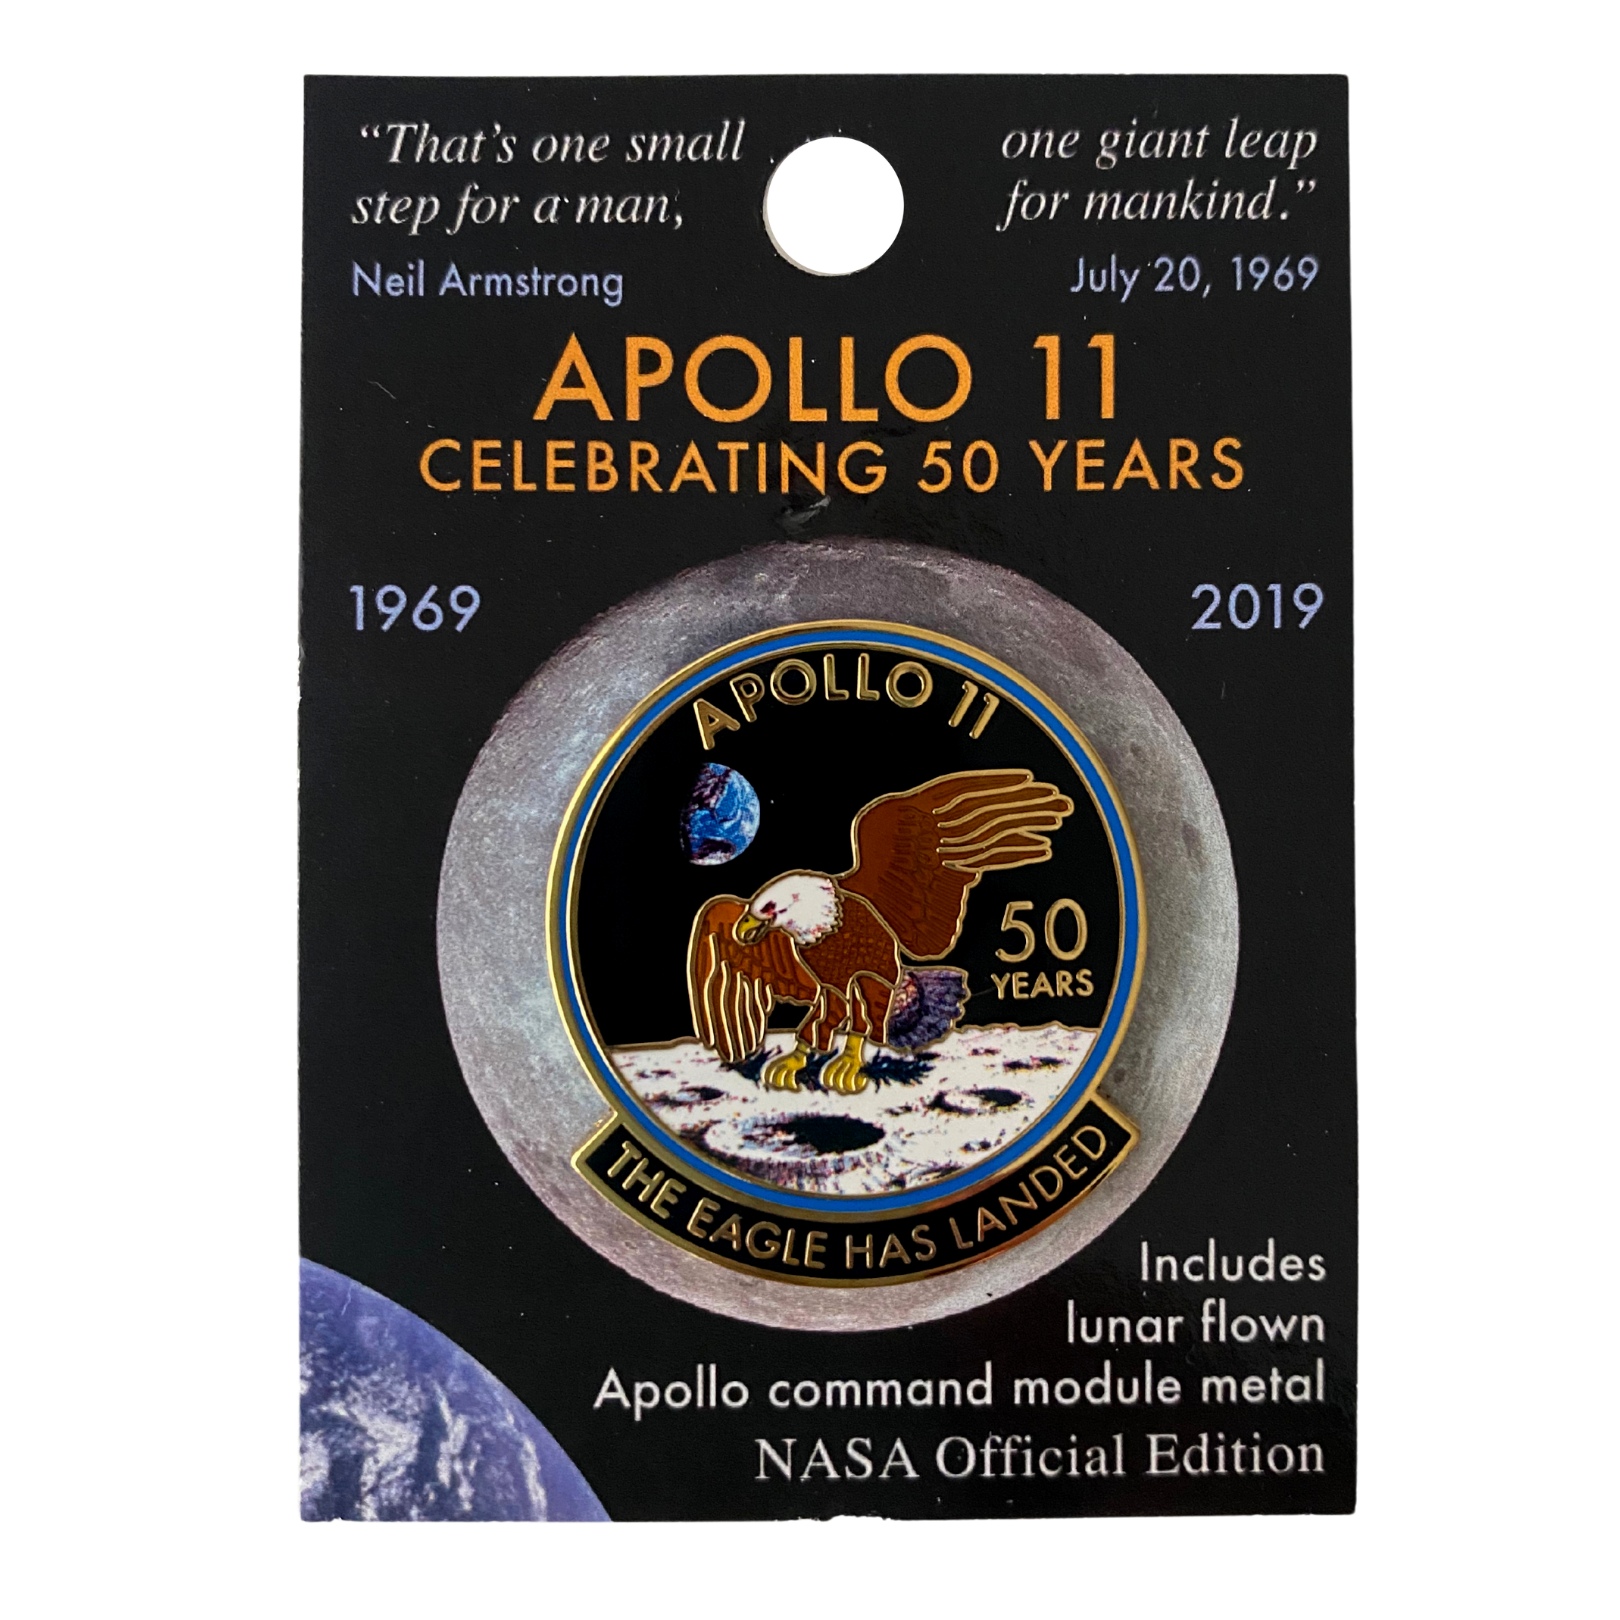 NASA Official Edition - Apollo 11, 50th Anniversary "The Eagle Has Landed" Lapel Pin